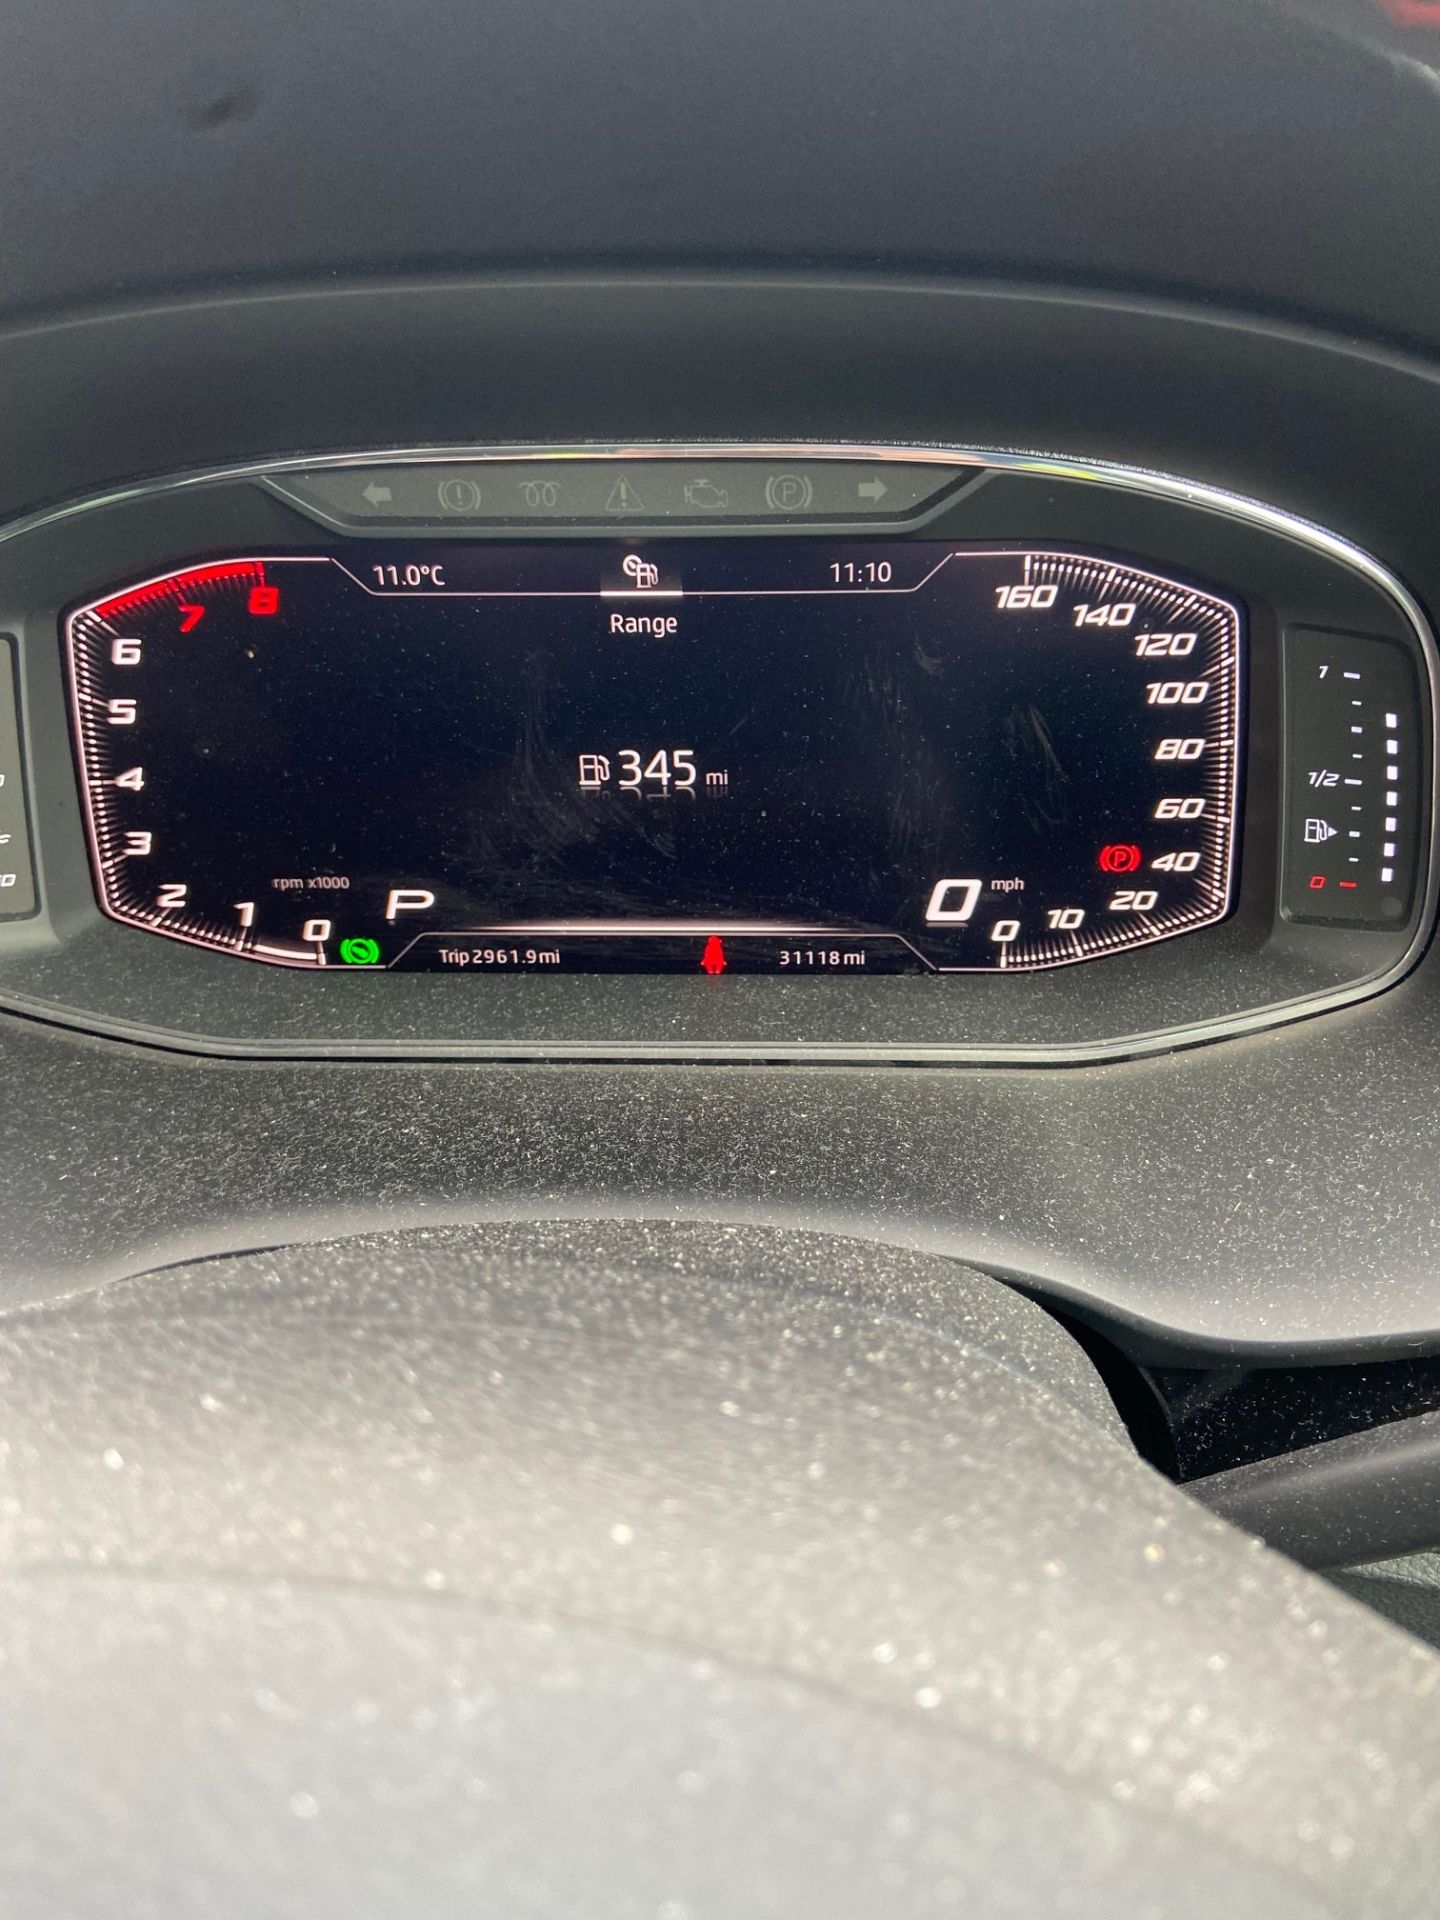 SEAT ATECA (YOM 2019) FR SPORT TSi 4 DRIVE 2.0 five door hatchback - petrol - black. - Bild 7 aus 13